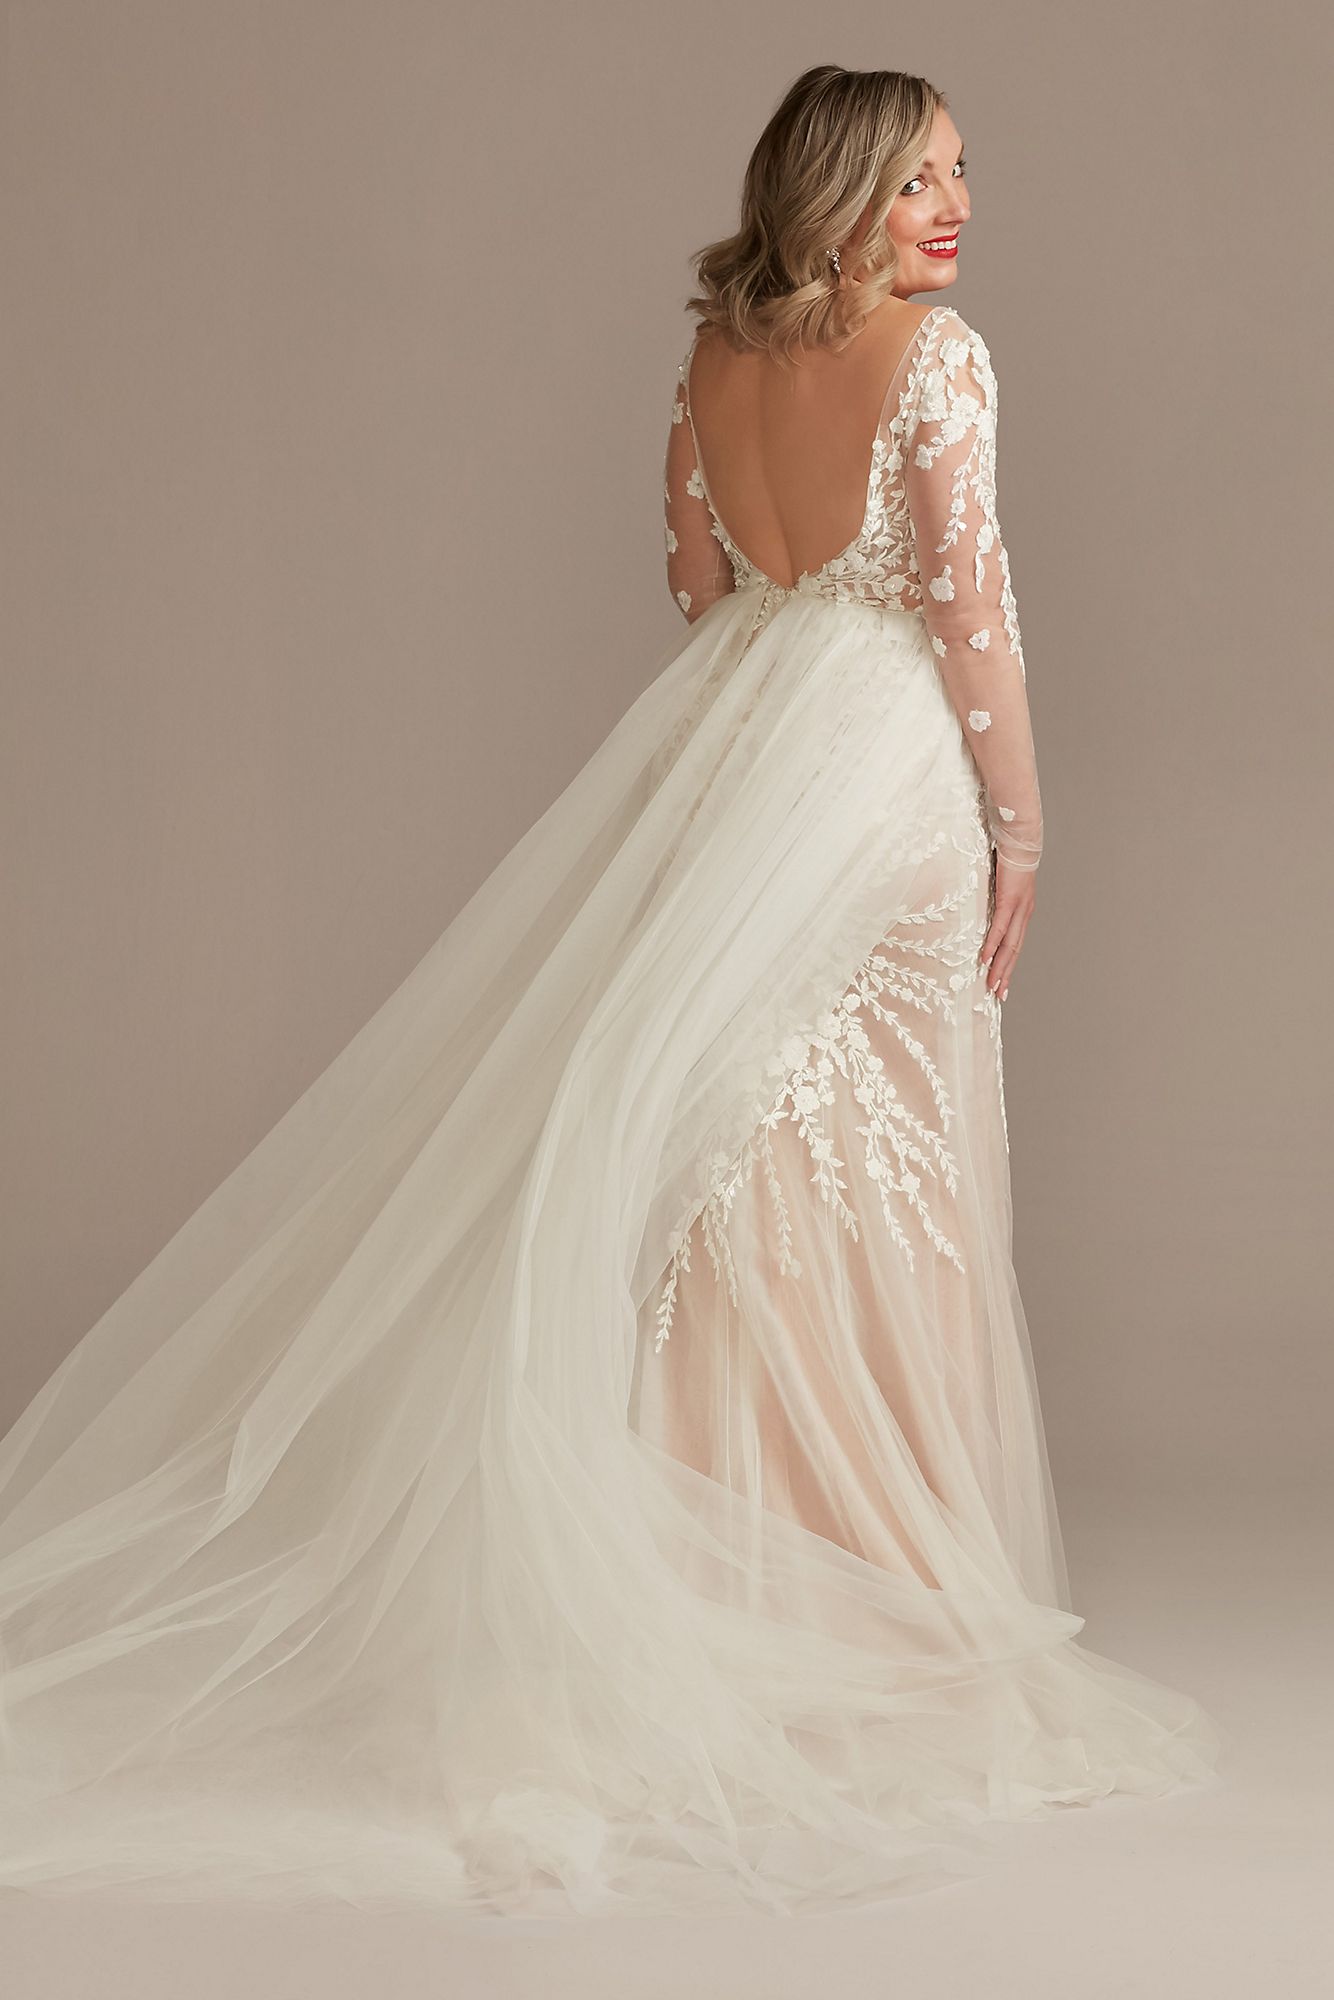 Long Sleeve Floral Illusion Bodysuit Wedding Dress Galina Signature LSSWG851